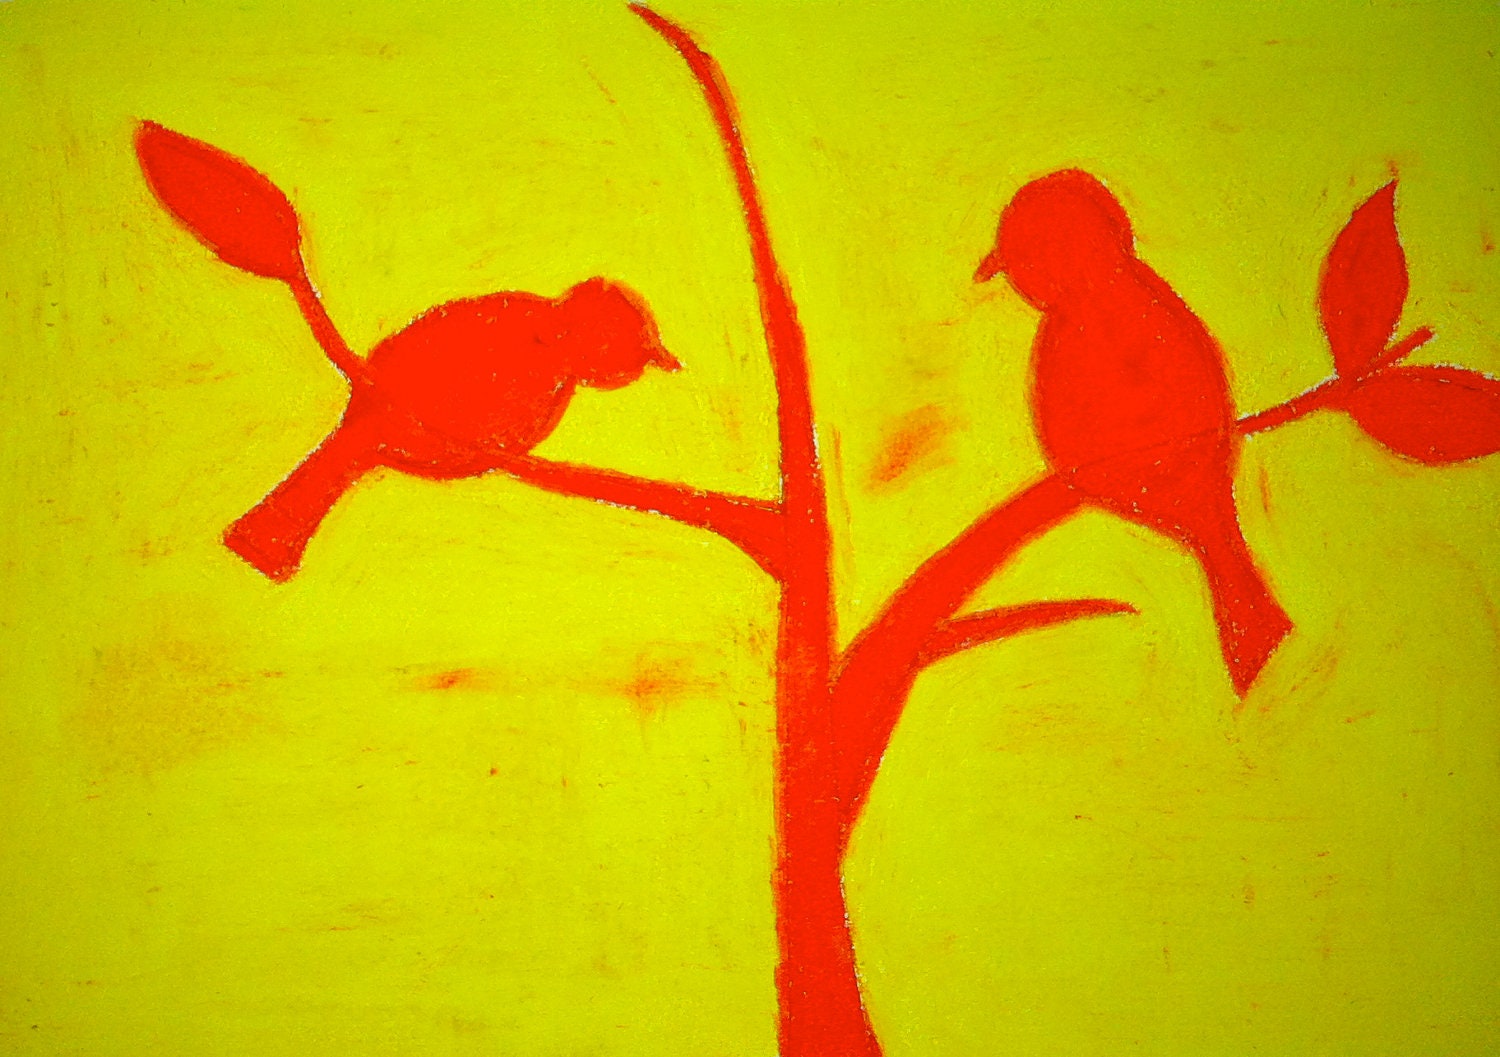 18x14 Wrapped Canvas Pink and Yellow Bird Art - PenningtonArt